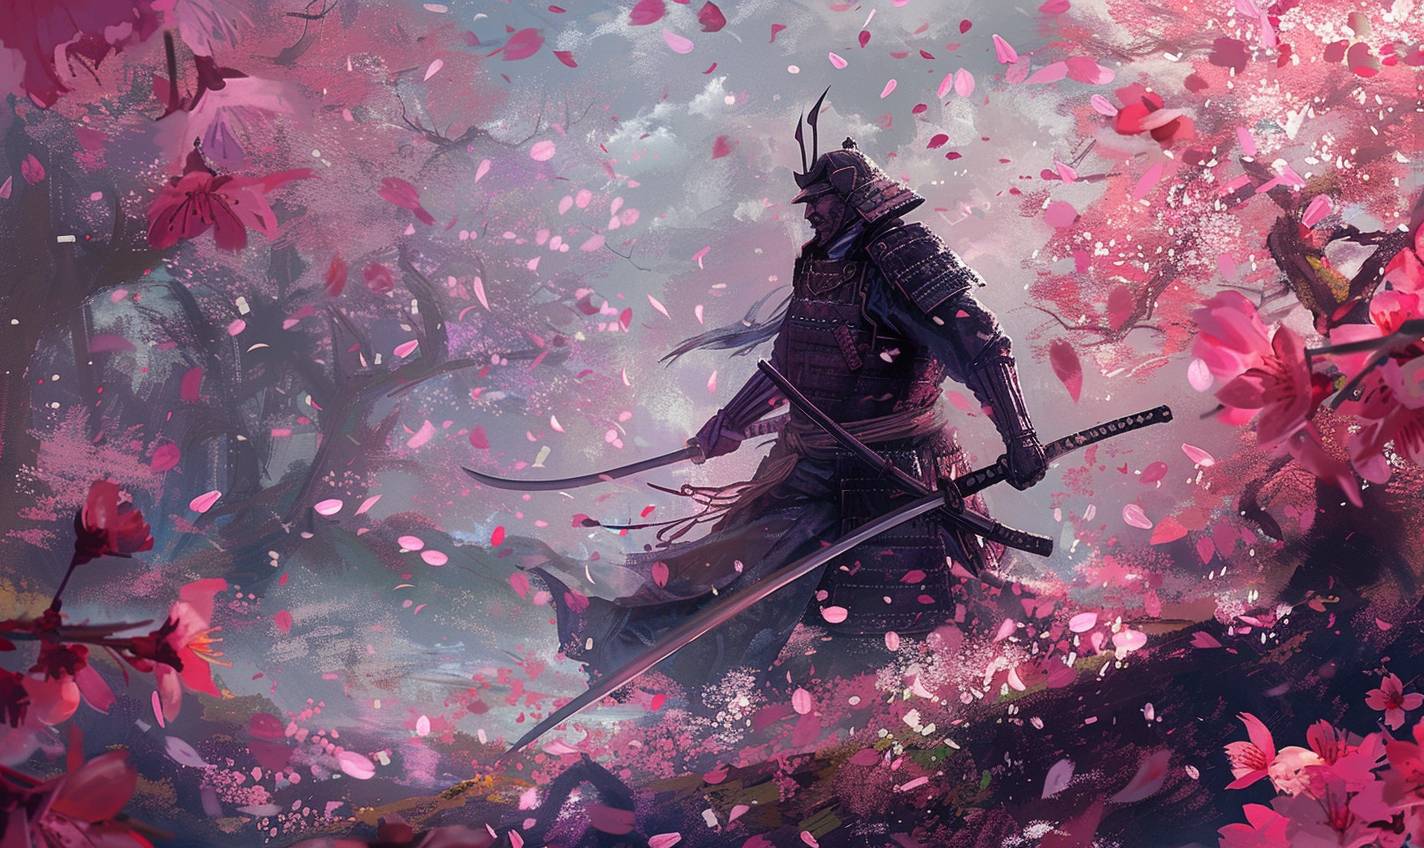 Krenz Cushartスタイルで、桜の庭でのサムライ戦士--ar 5:3  --v 6.0